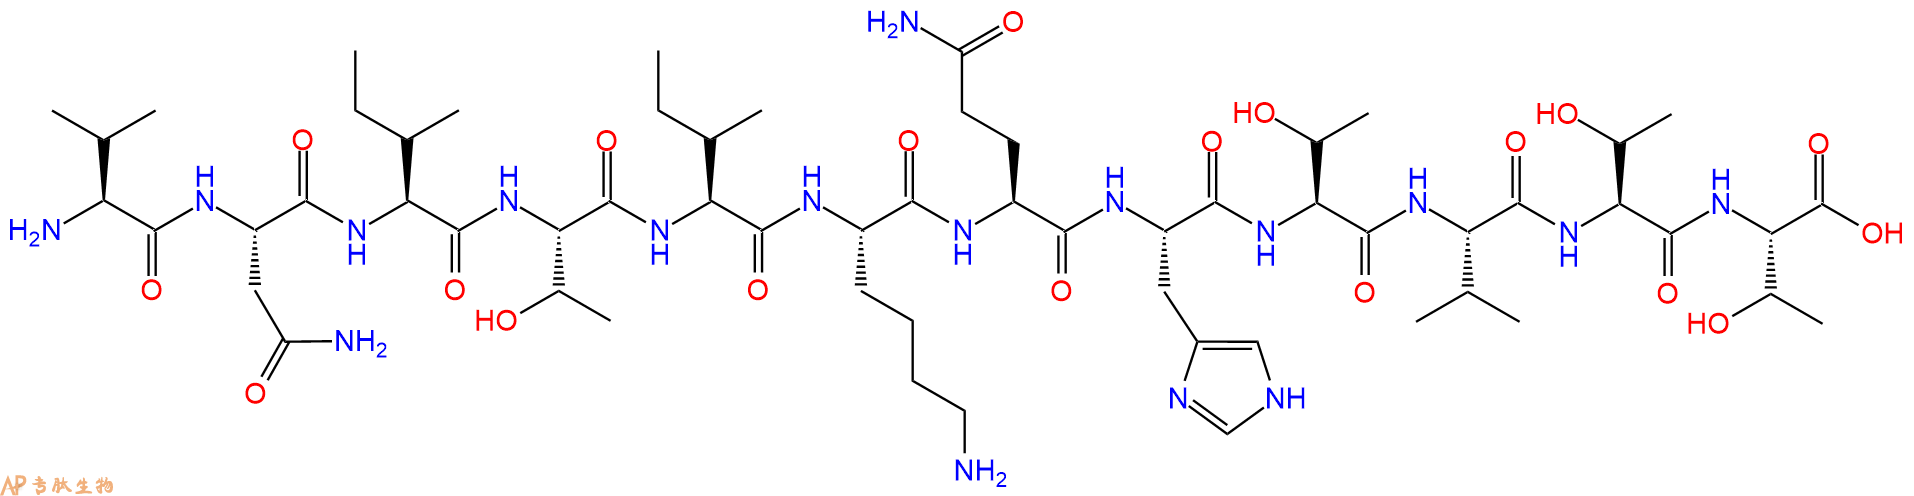 专肽生物产品H2N-Val-Asn-Ile-Thr-Ile-Lys-Gln-His-Thr-Val-Thr-Th